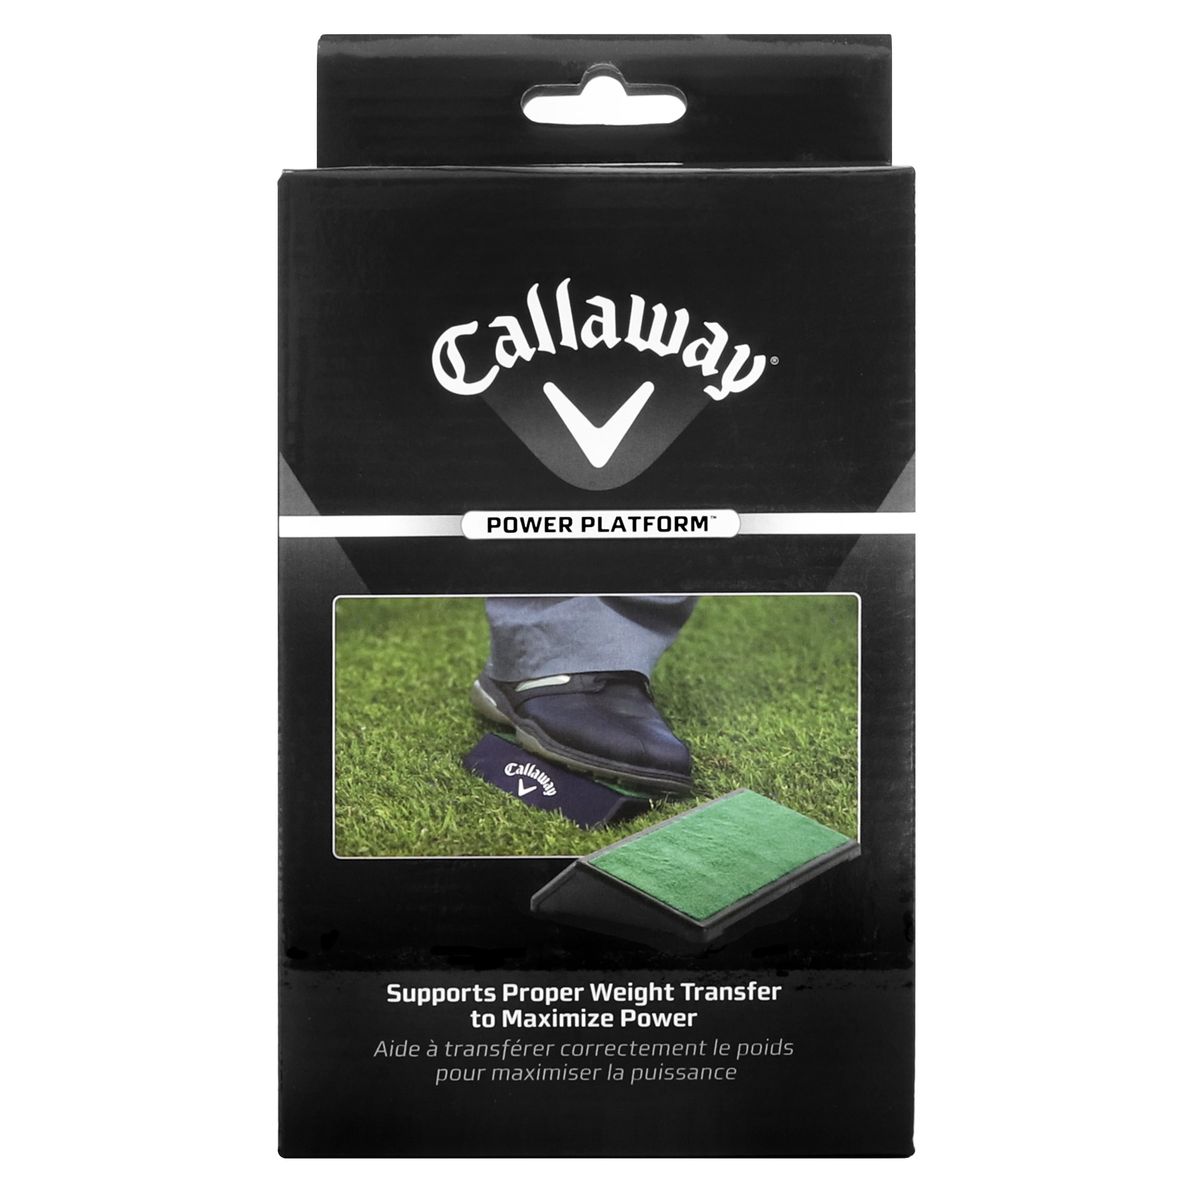 [RDY] [送料無料] Callaway Golf パワー・プラットフォーム [楽天海外通販] | Callaway Golf Power Platform